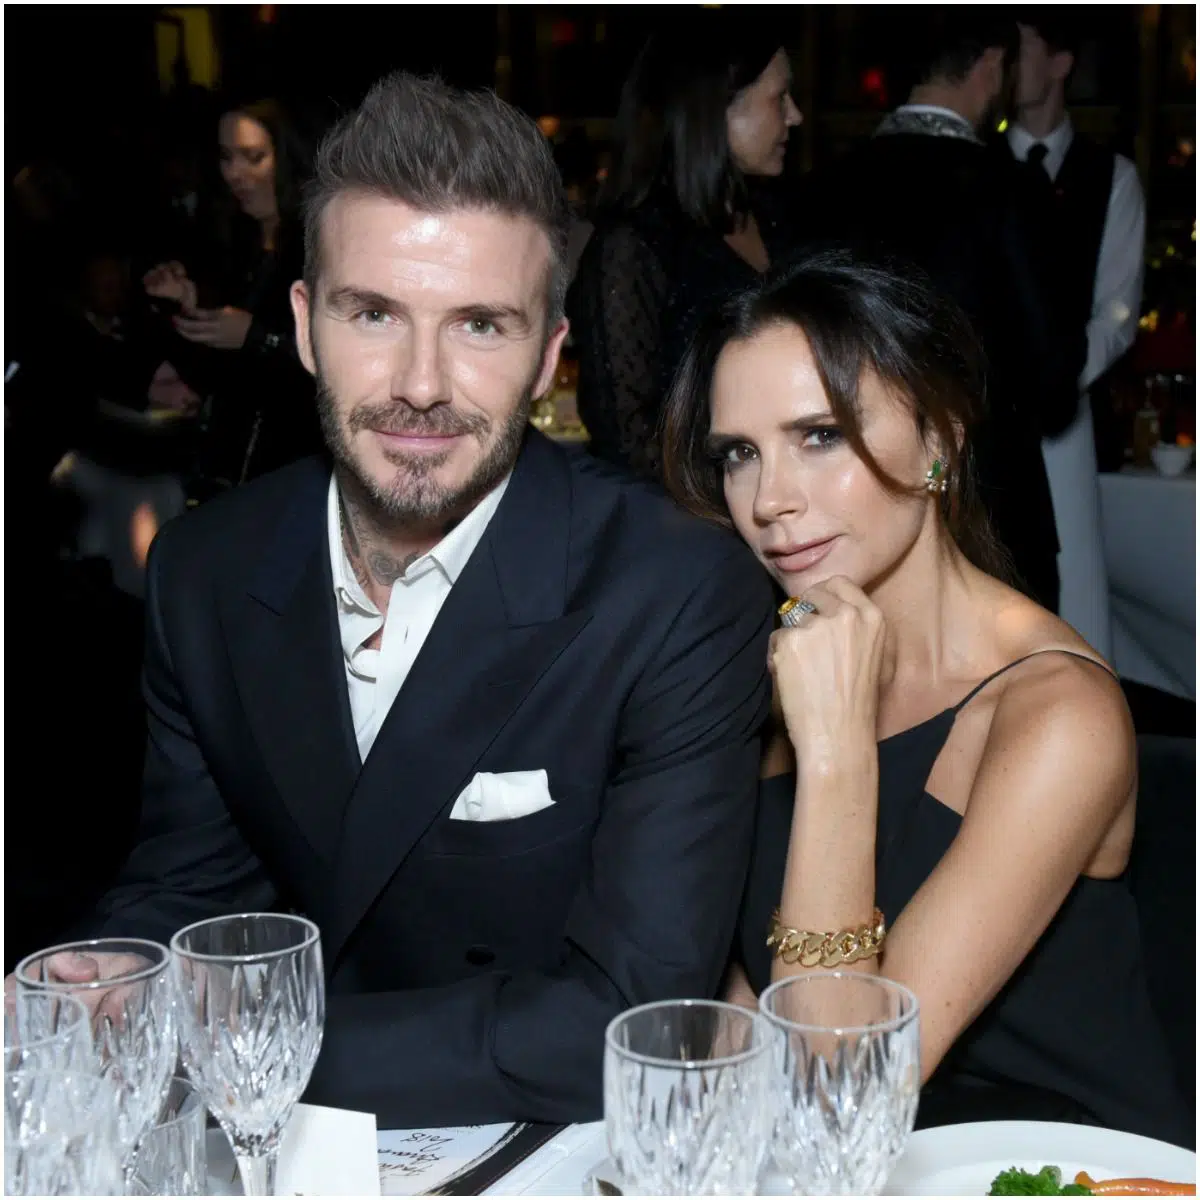 David Beckham and wife Victoria